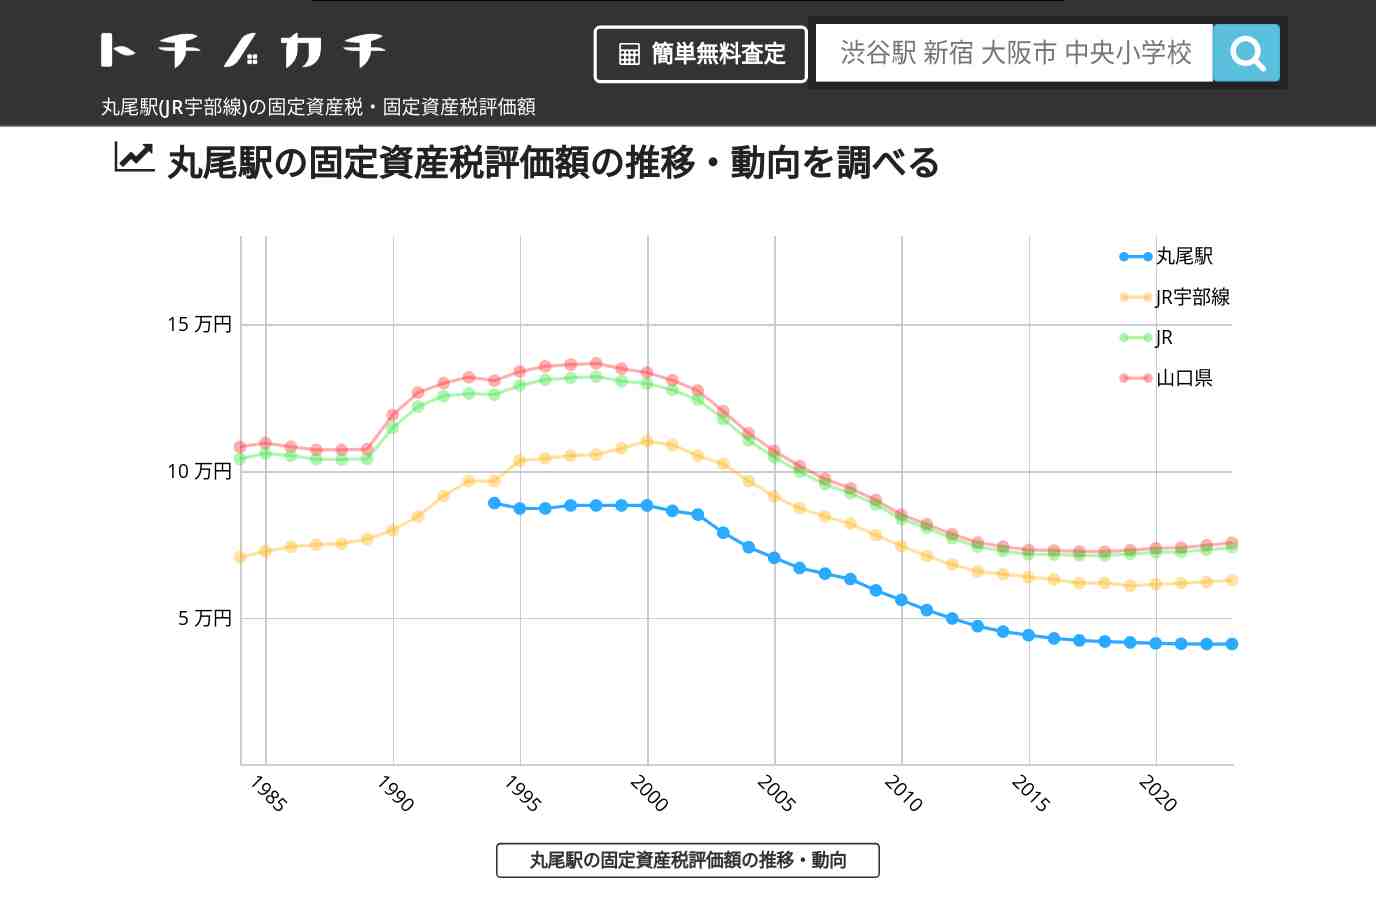 丸尾駅(JR宇部線)の固定資産税・固定資産税評価額 | トチノカチ